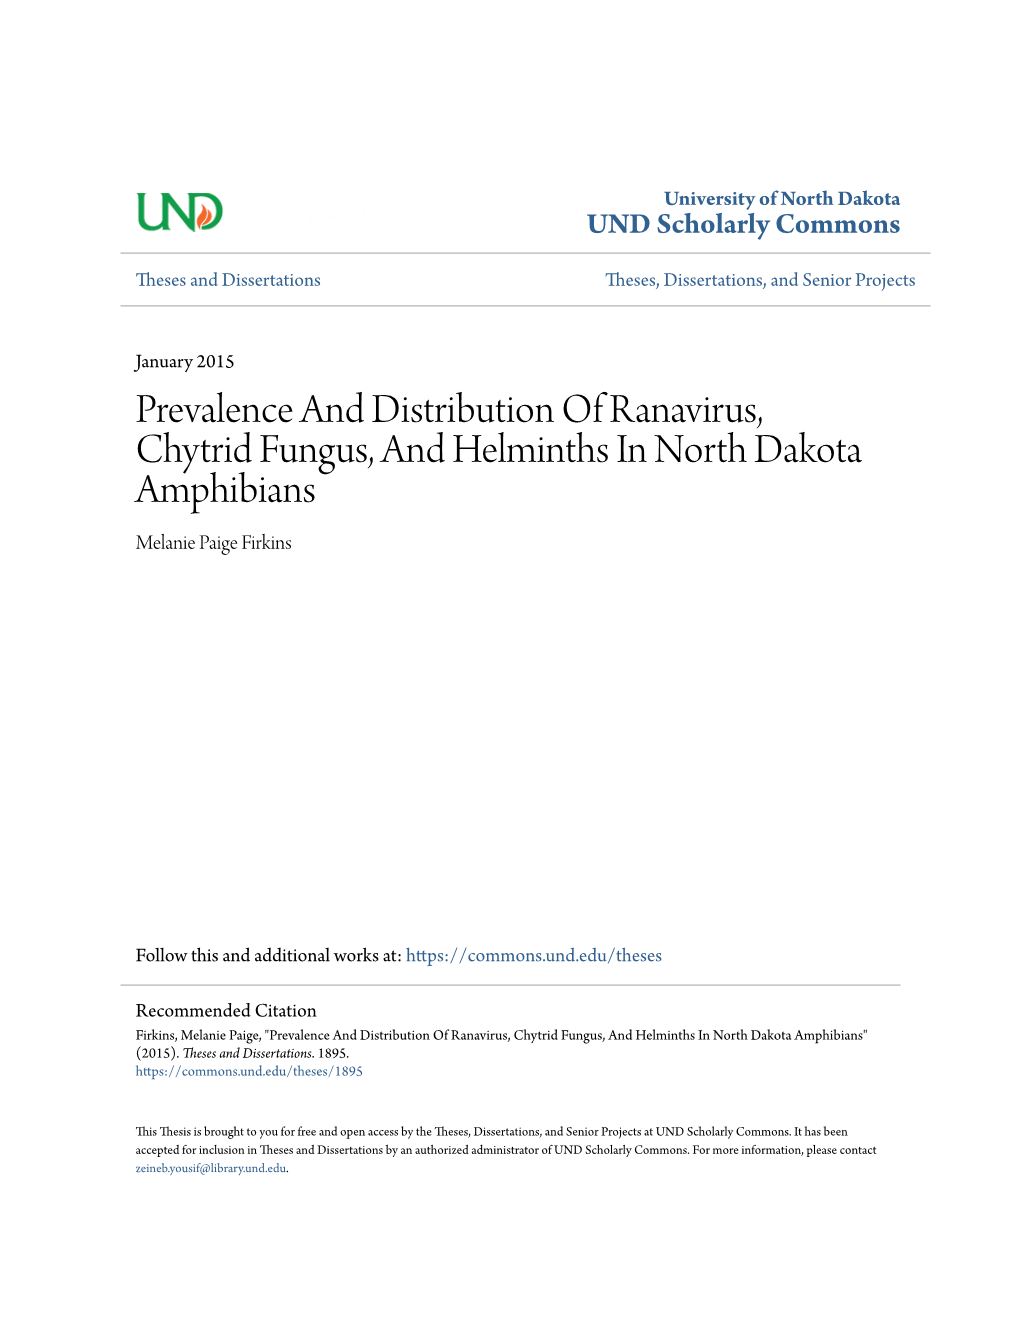 Prevalence and Distribution of Ranavirus, Chytrid Fungus, and Helminths in North Dakota Amphibians Melanie Paige Firkins